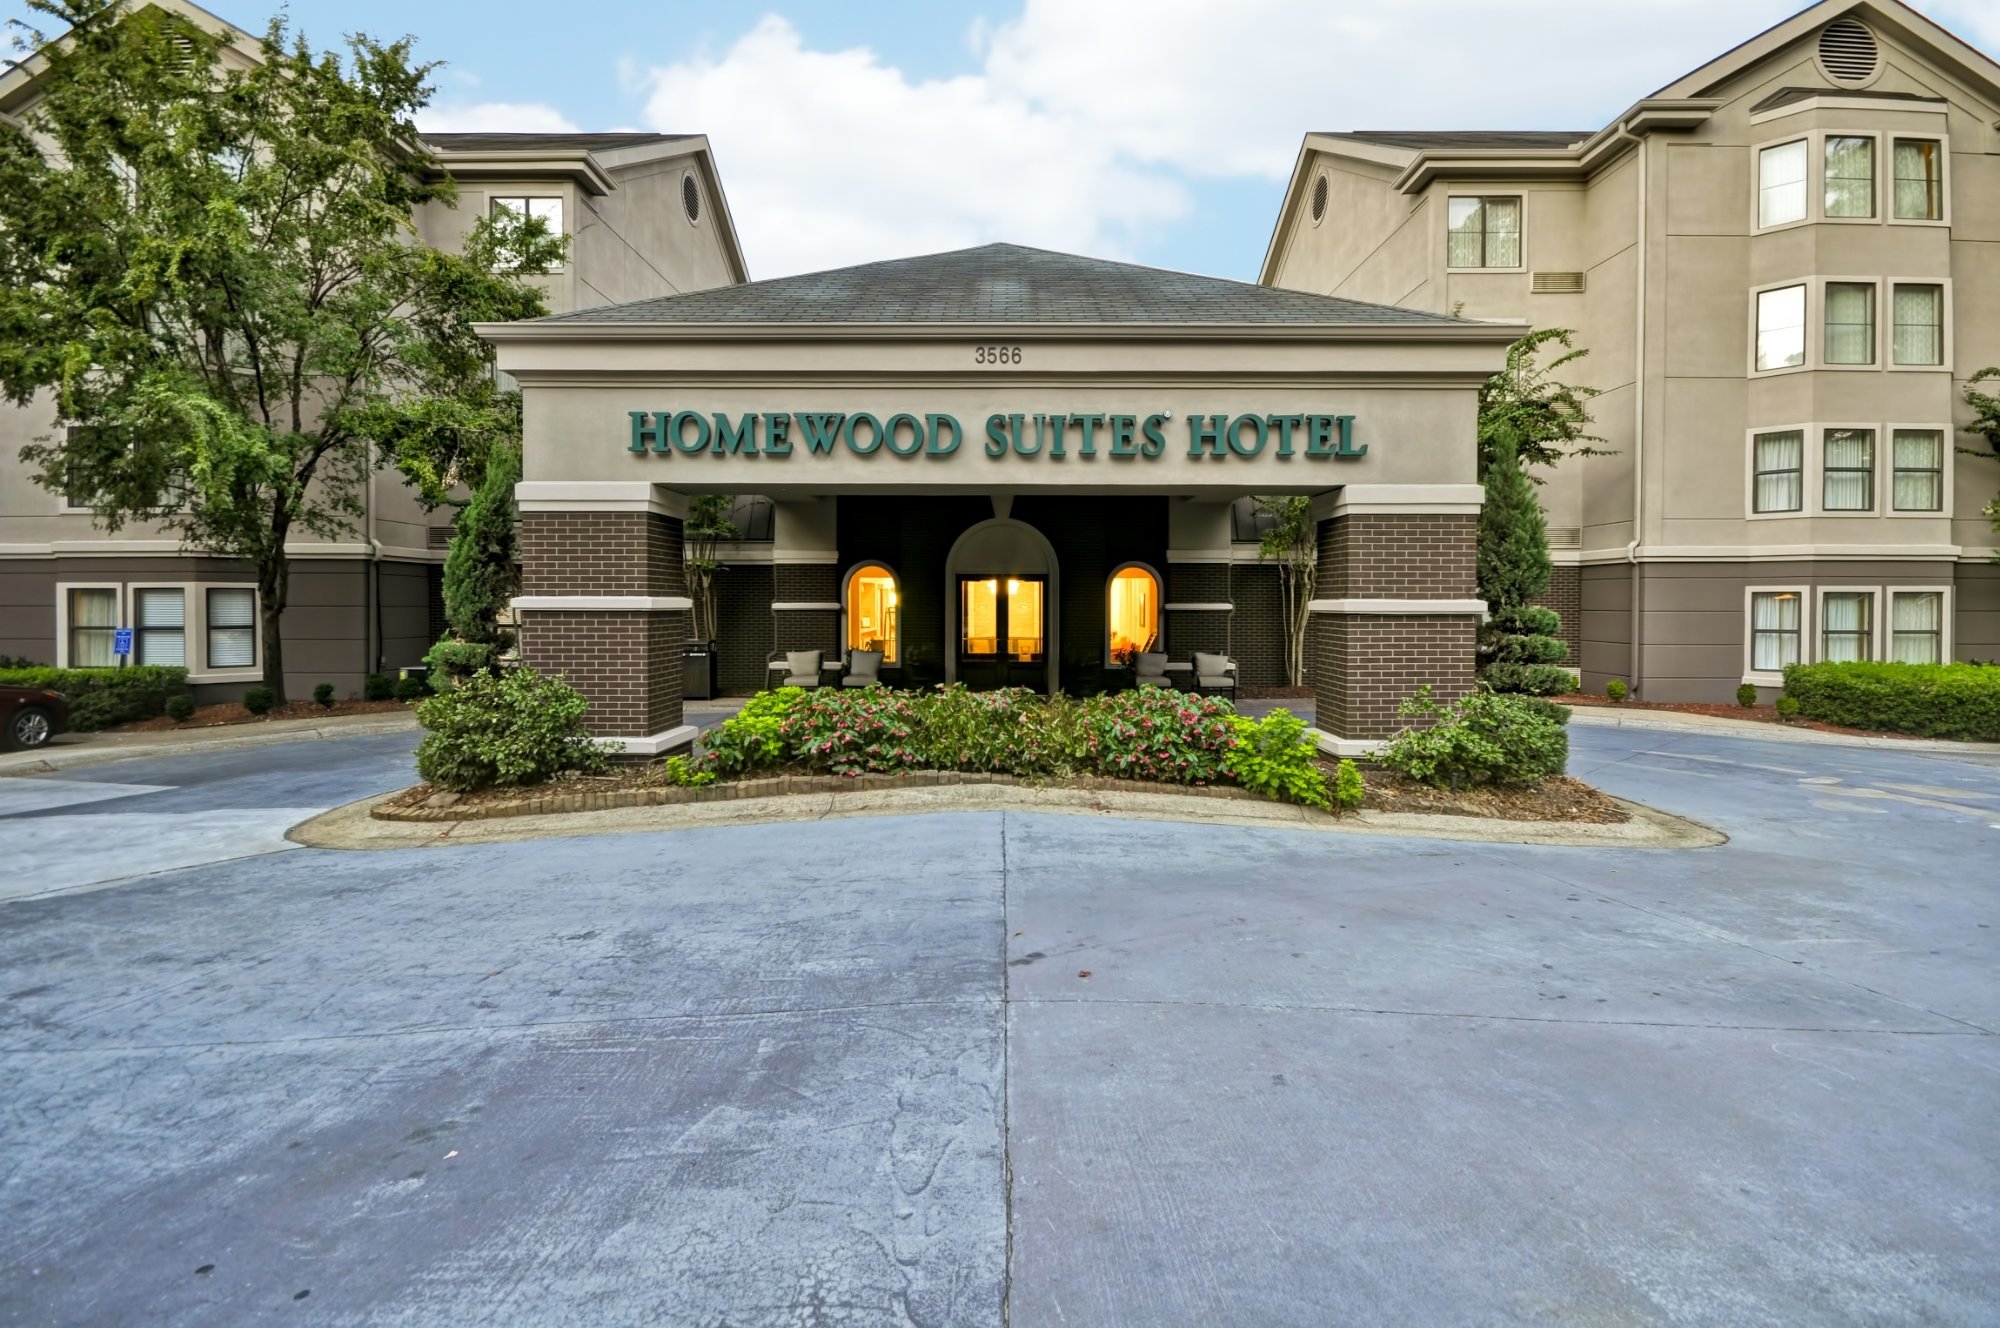 Photo of Homewood Suites by Hilton Atlanta - Buckhead, Atlanta, GA